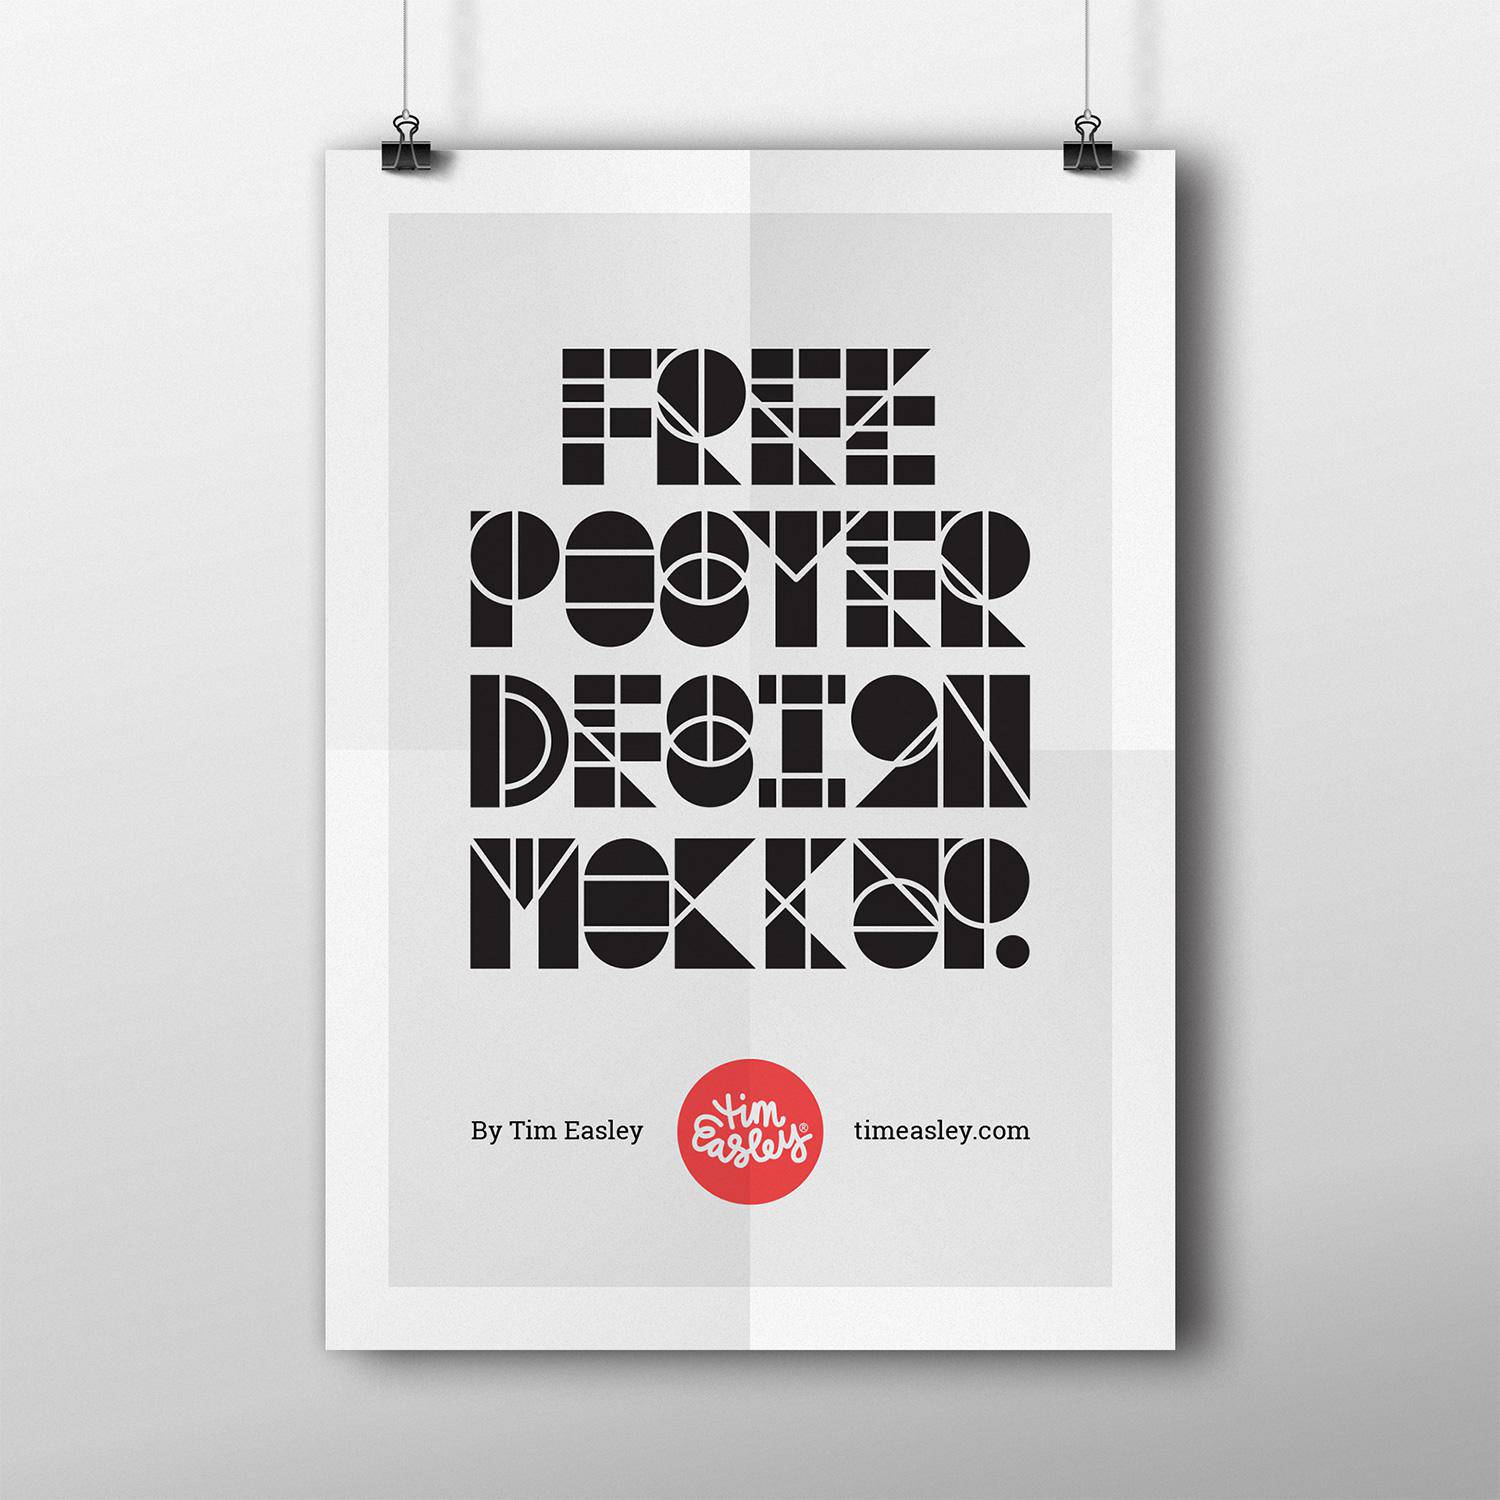 Free-Poster-Design-Mockup-6